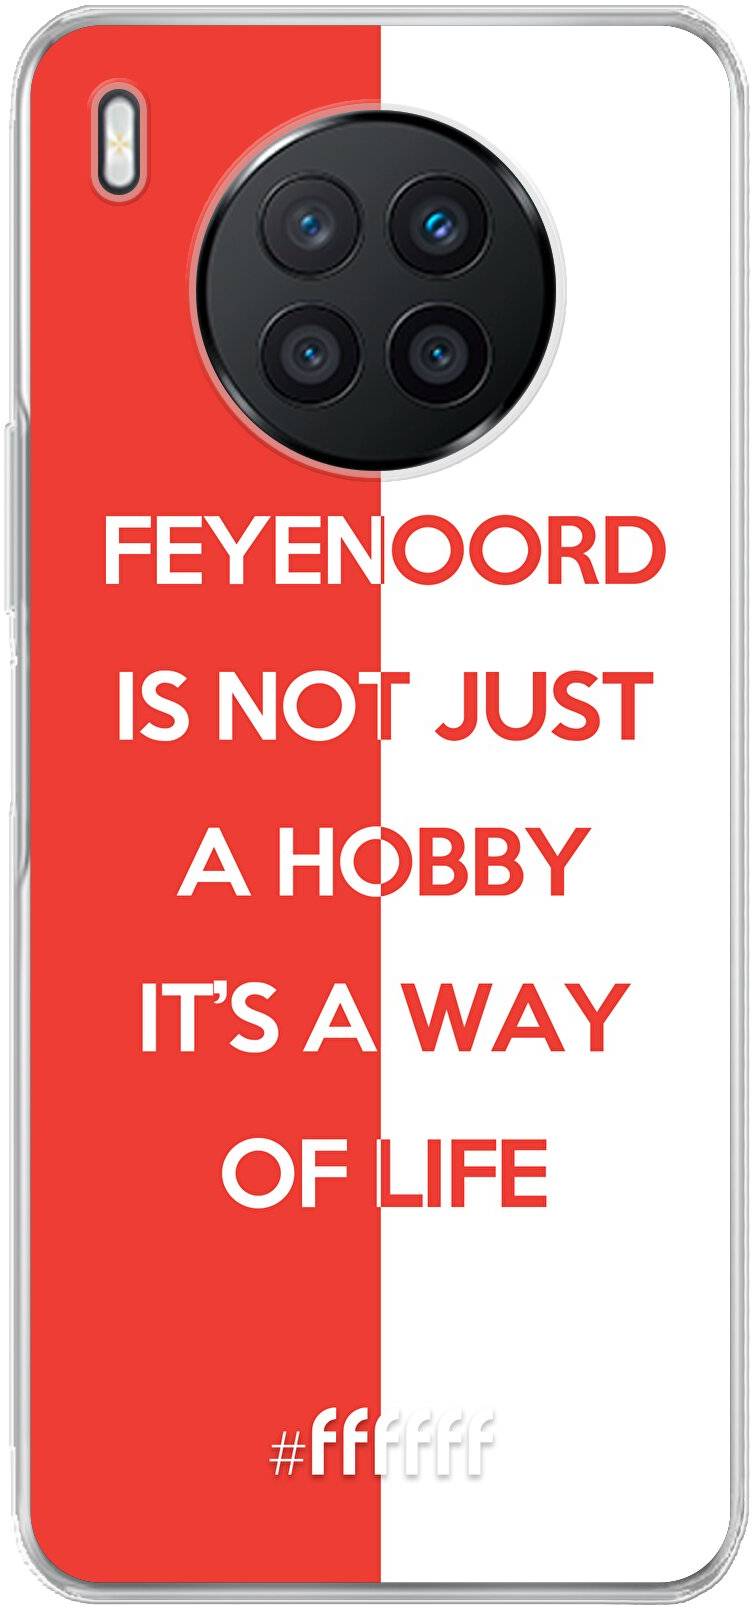 Feyenoord - Way of life Nova 8i